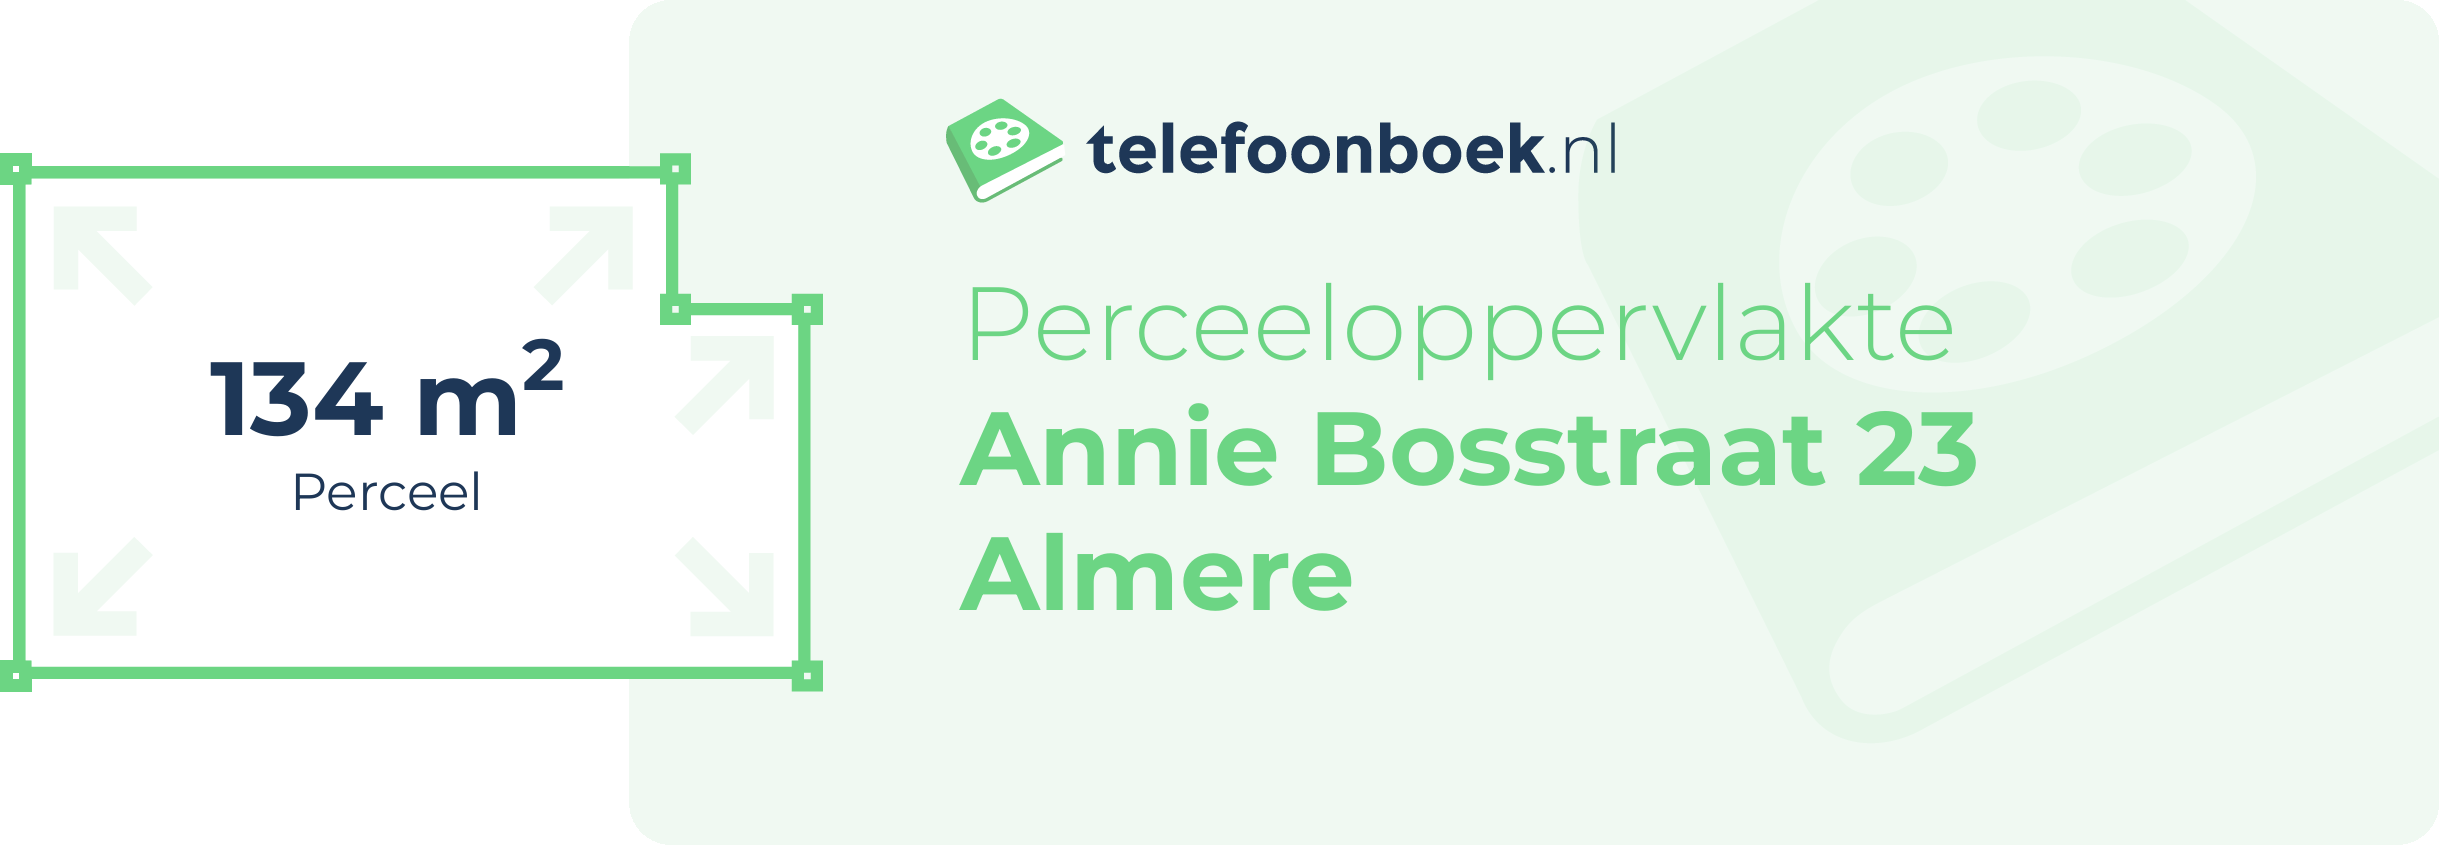 Perceeloppervlakte Annie Bosstraat 23 Almere